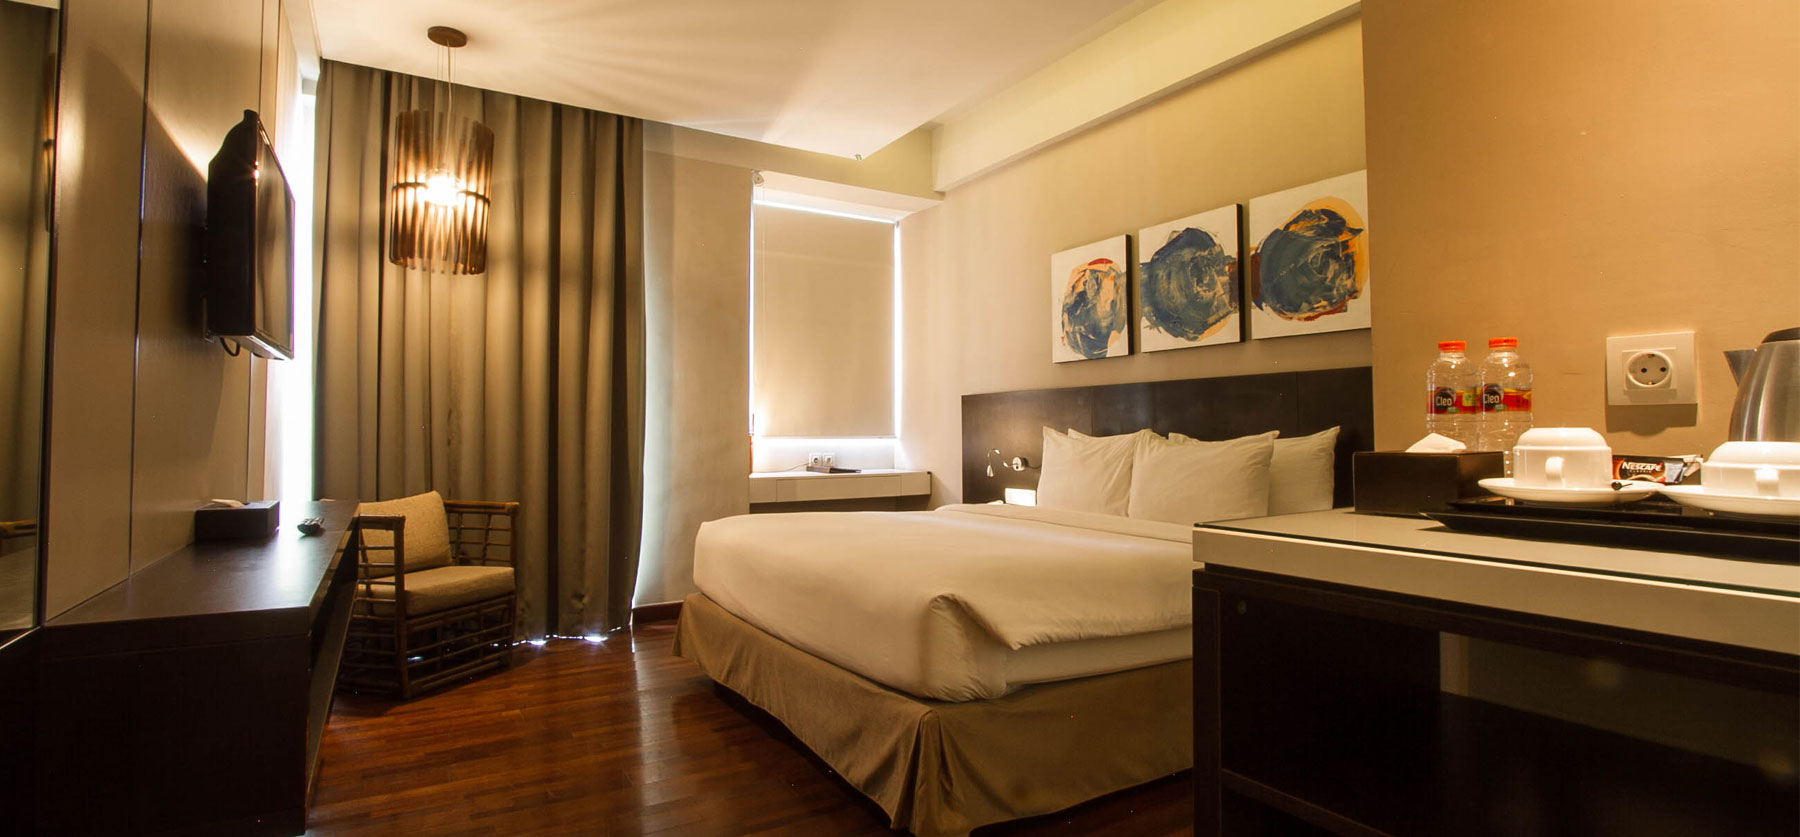 batu - amartahills hotel and resort deluxe room